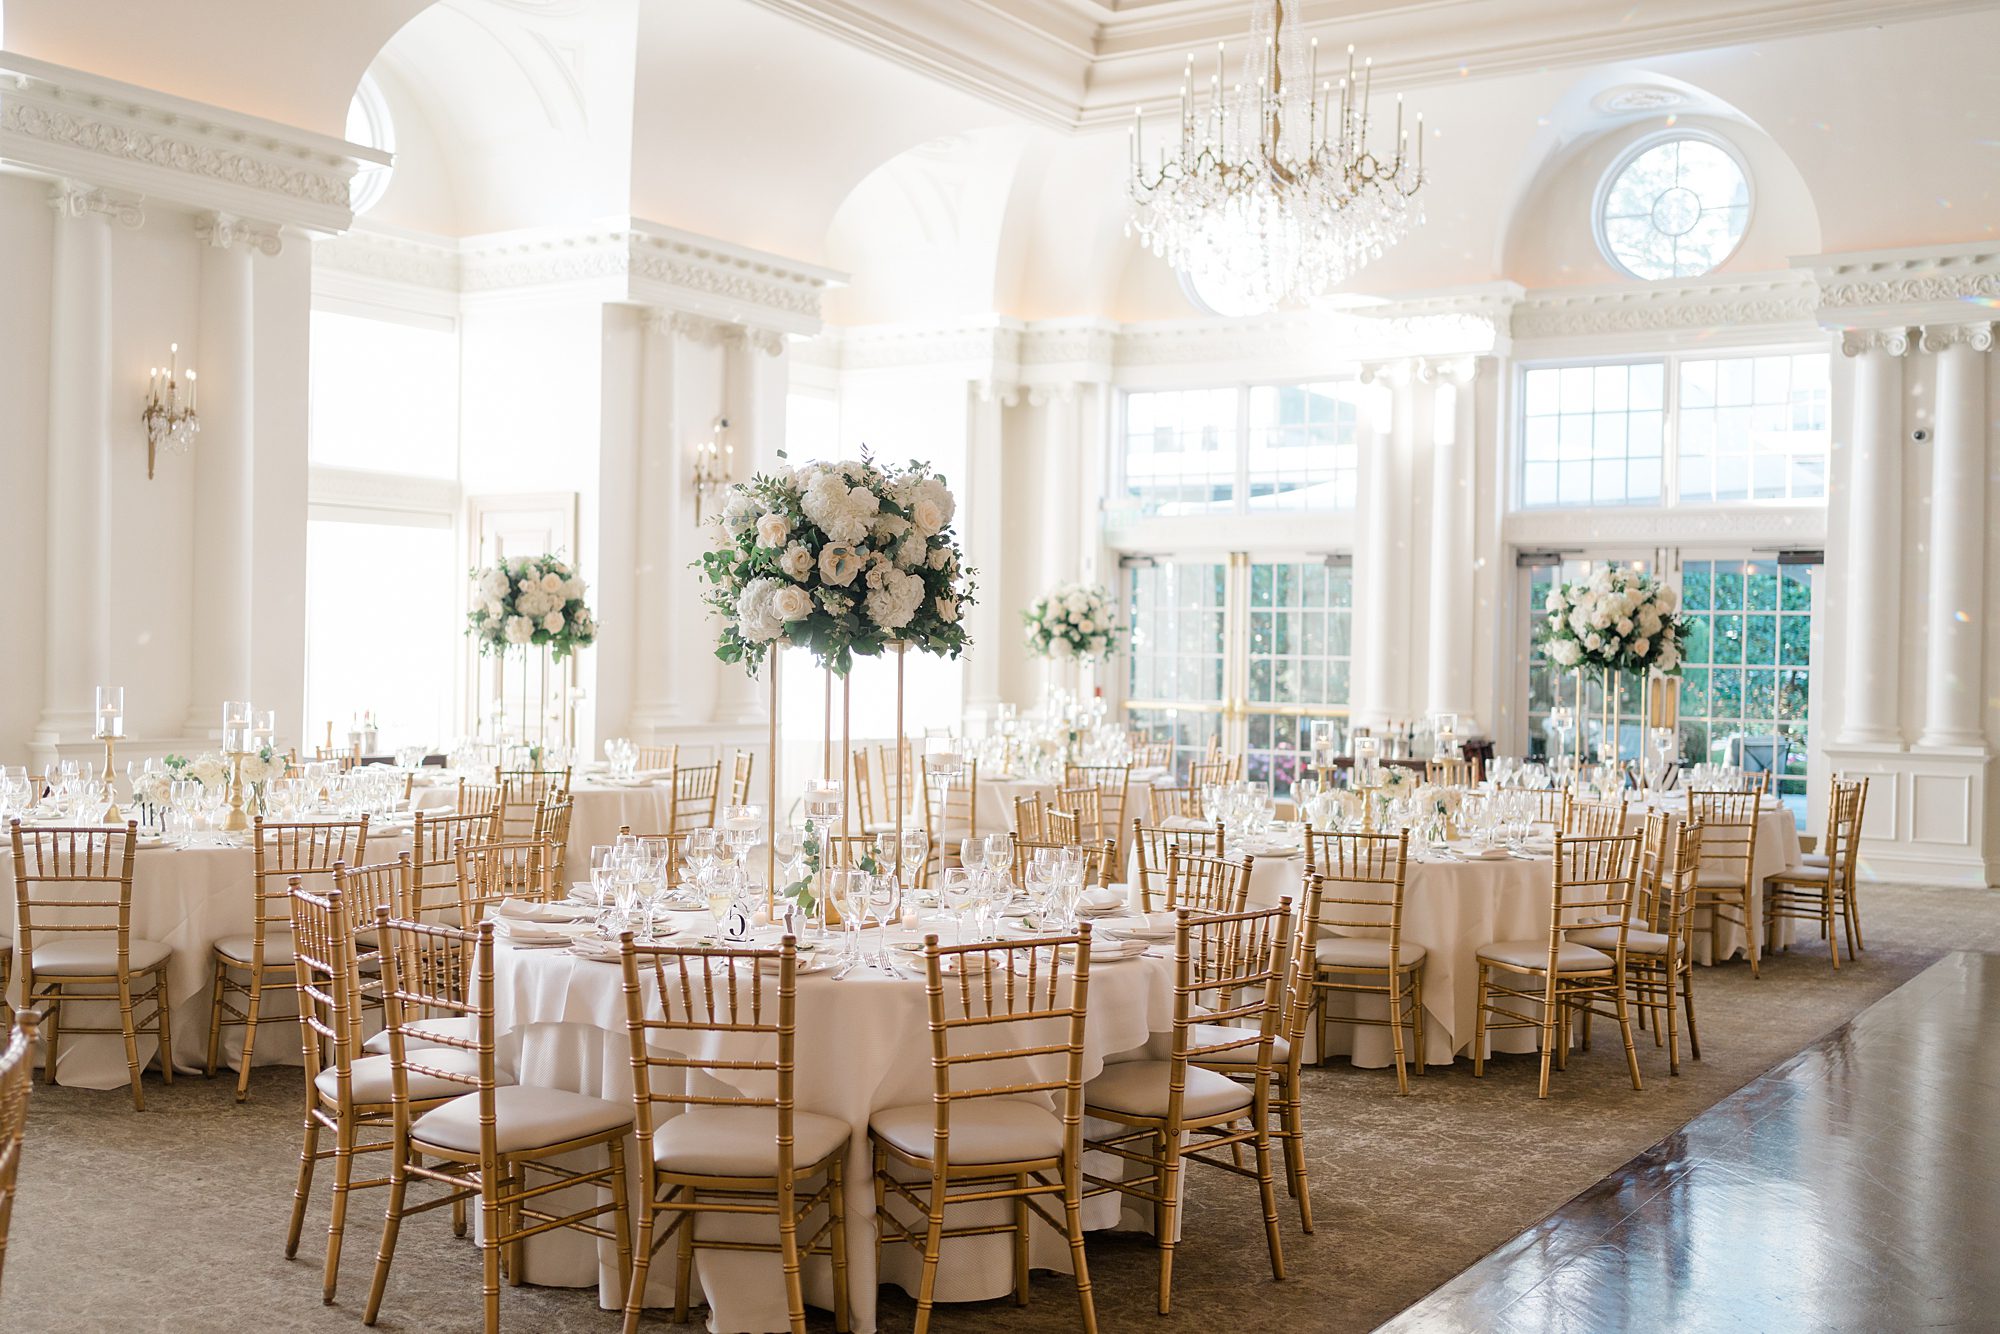 Timeless Park Chateau Wedding reception in elegant ballroom